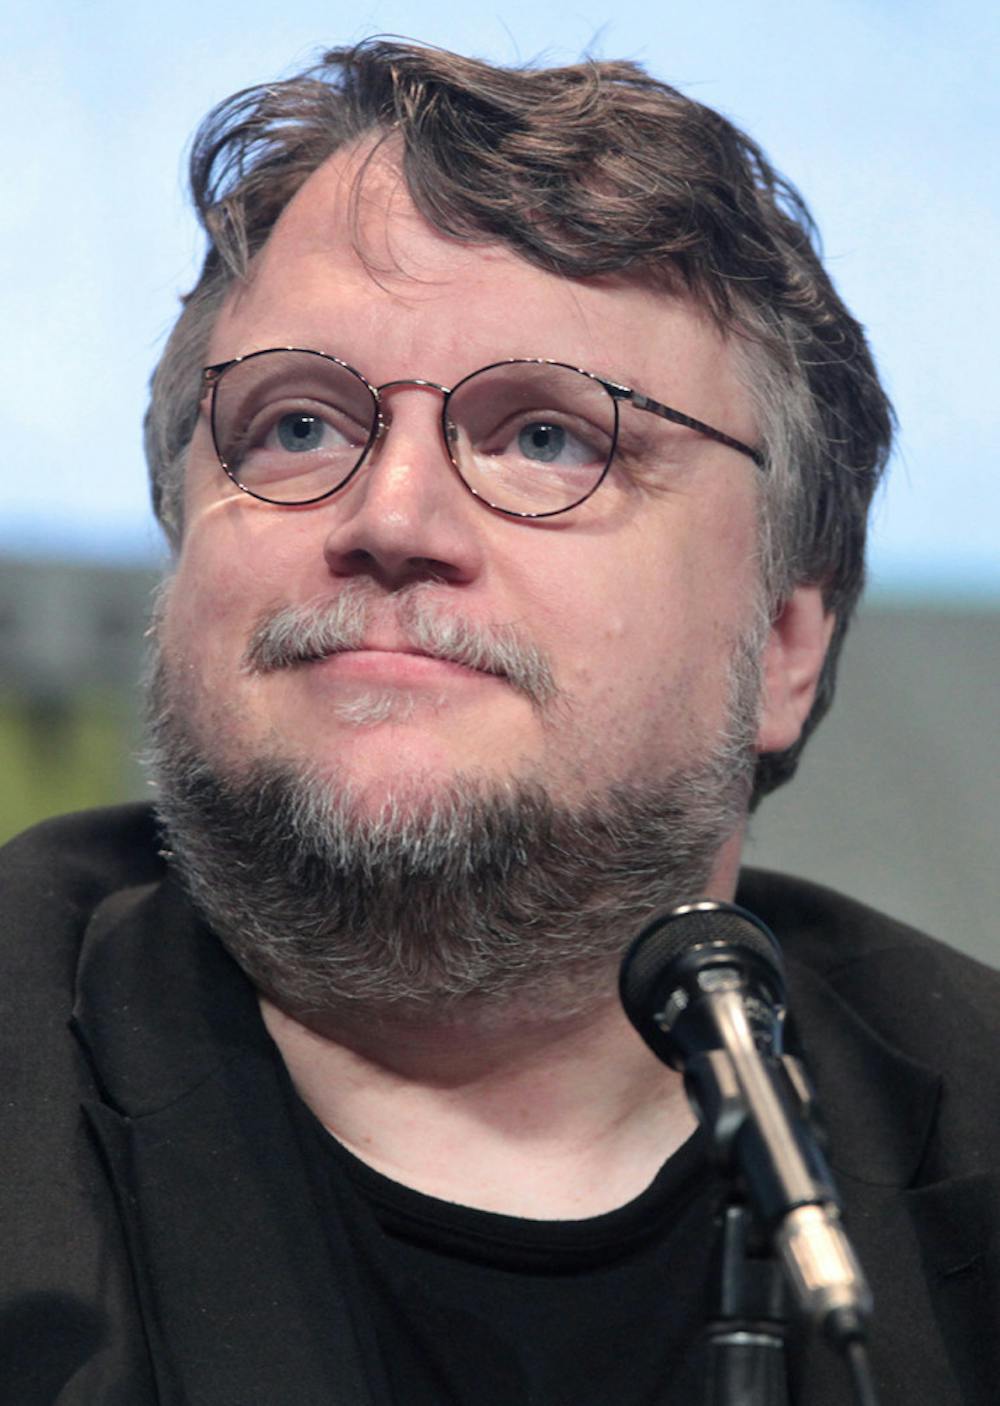 Guillermo del Toro at the 2015 San Diego Comic Con International in San Diego, California.